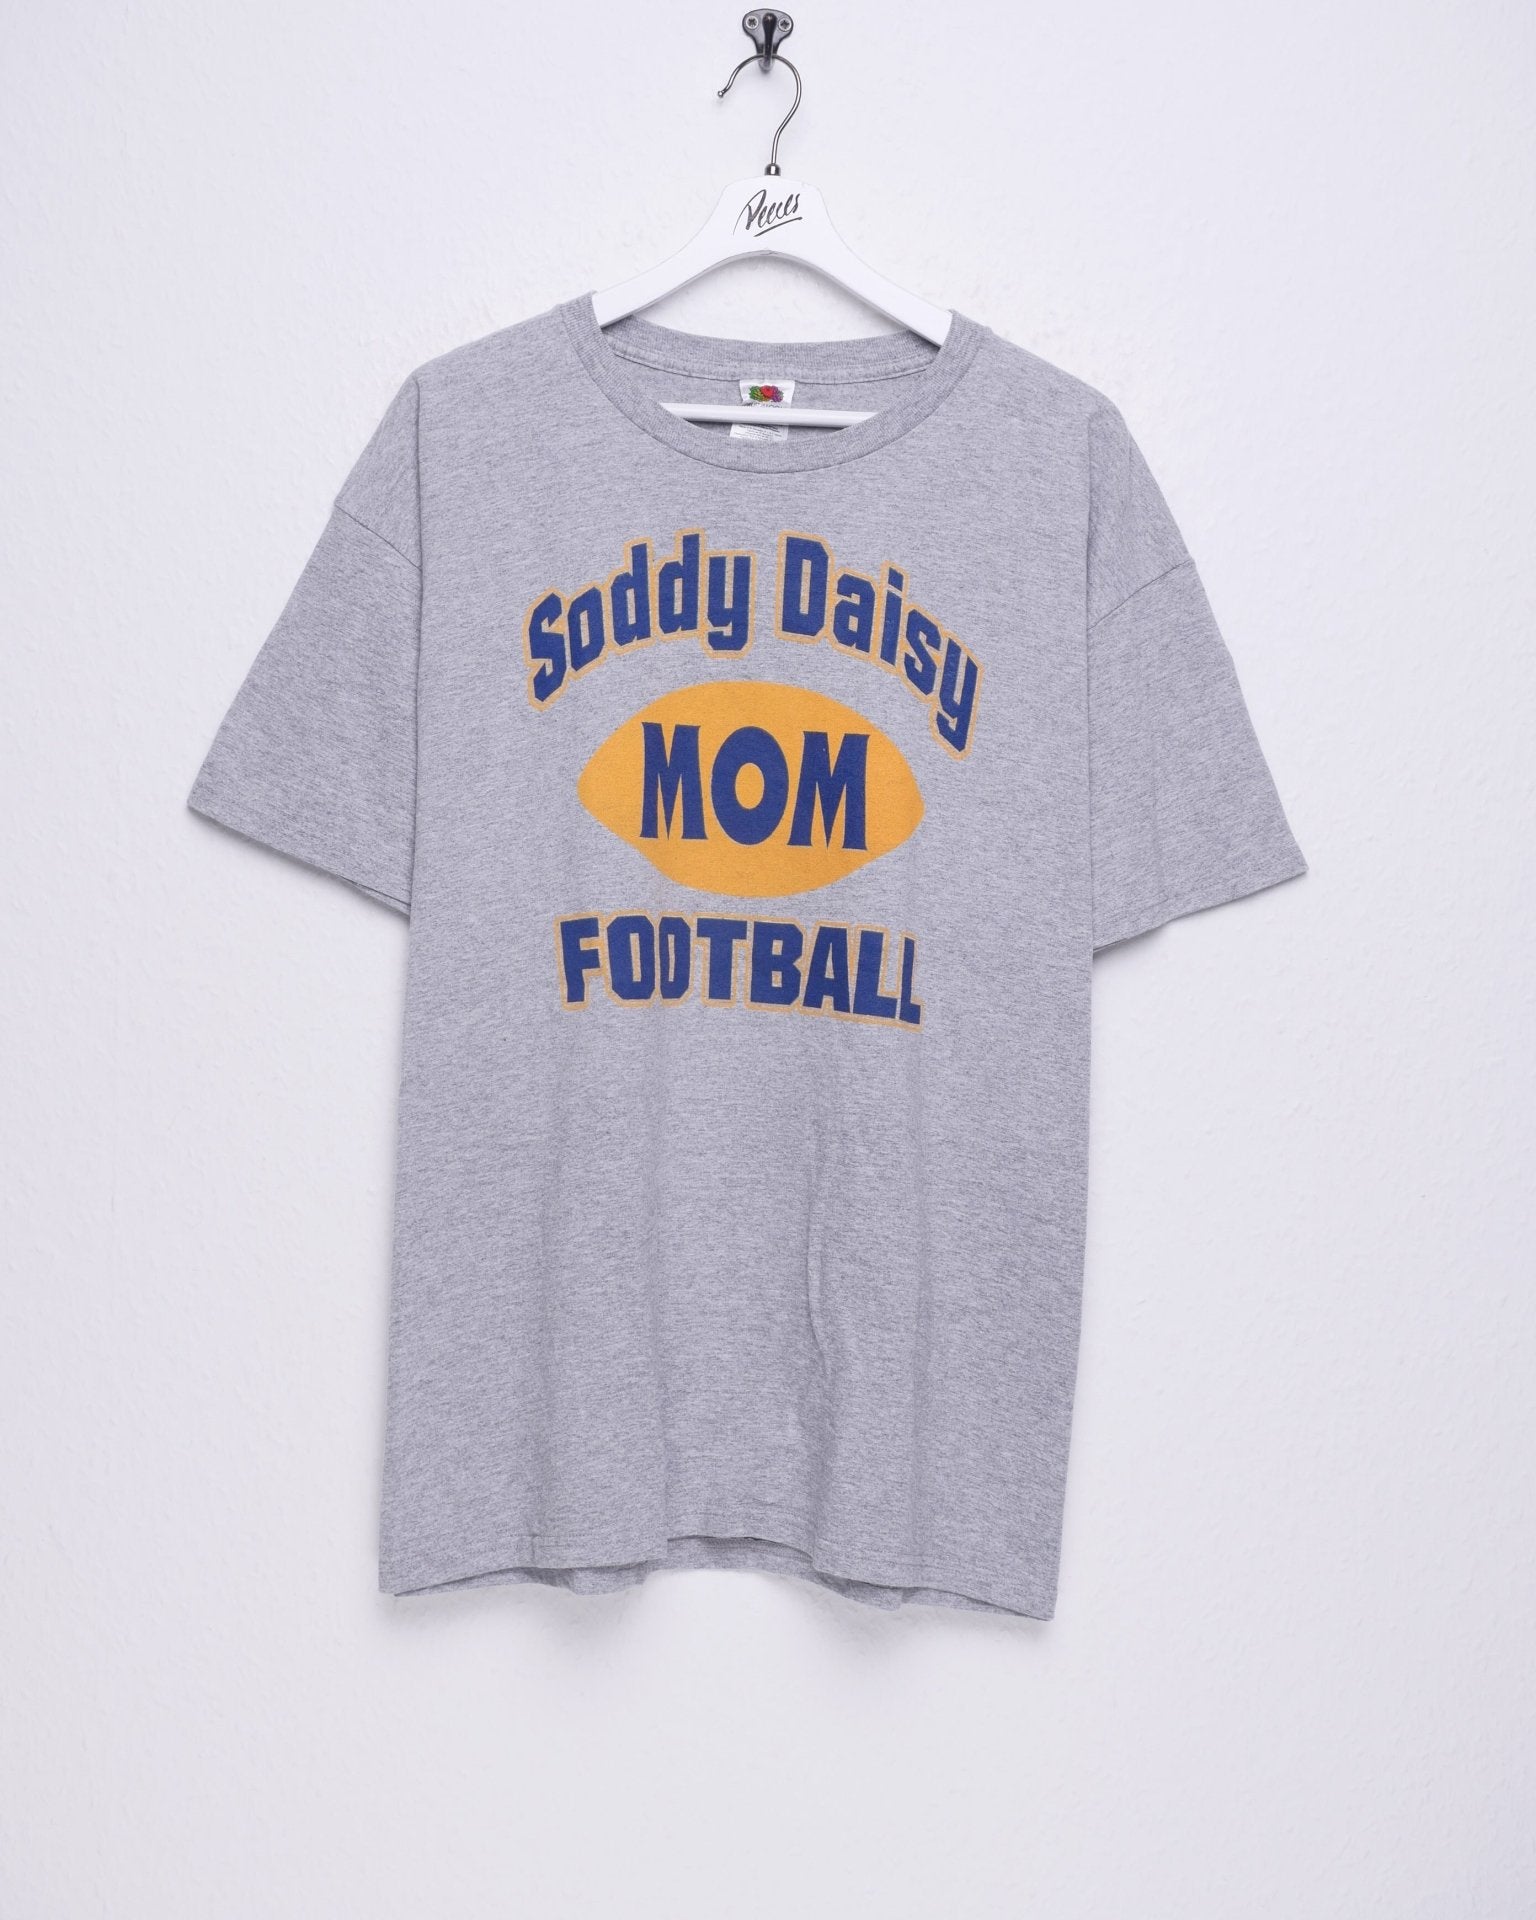 Soddy Daisy Mom Football printed Spellout Shirt - Peeces